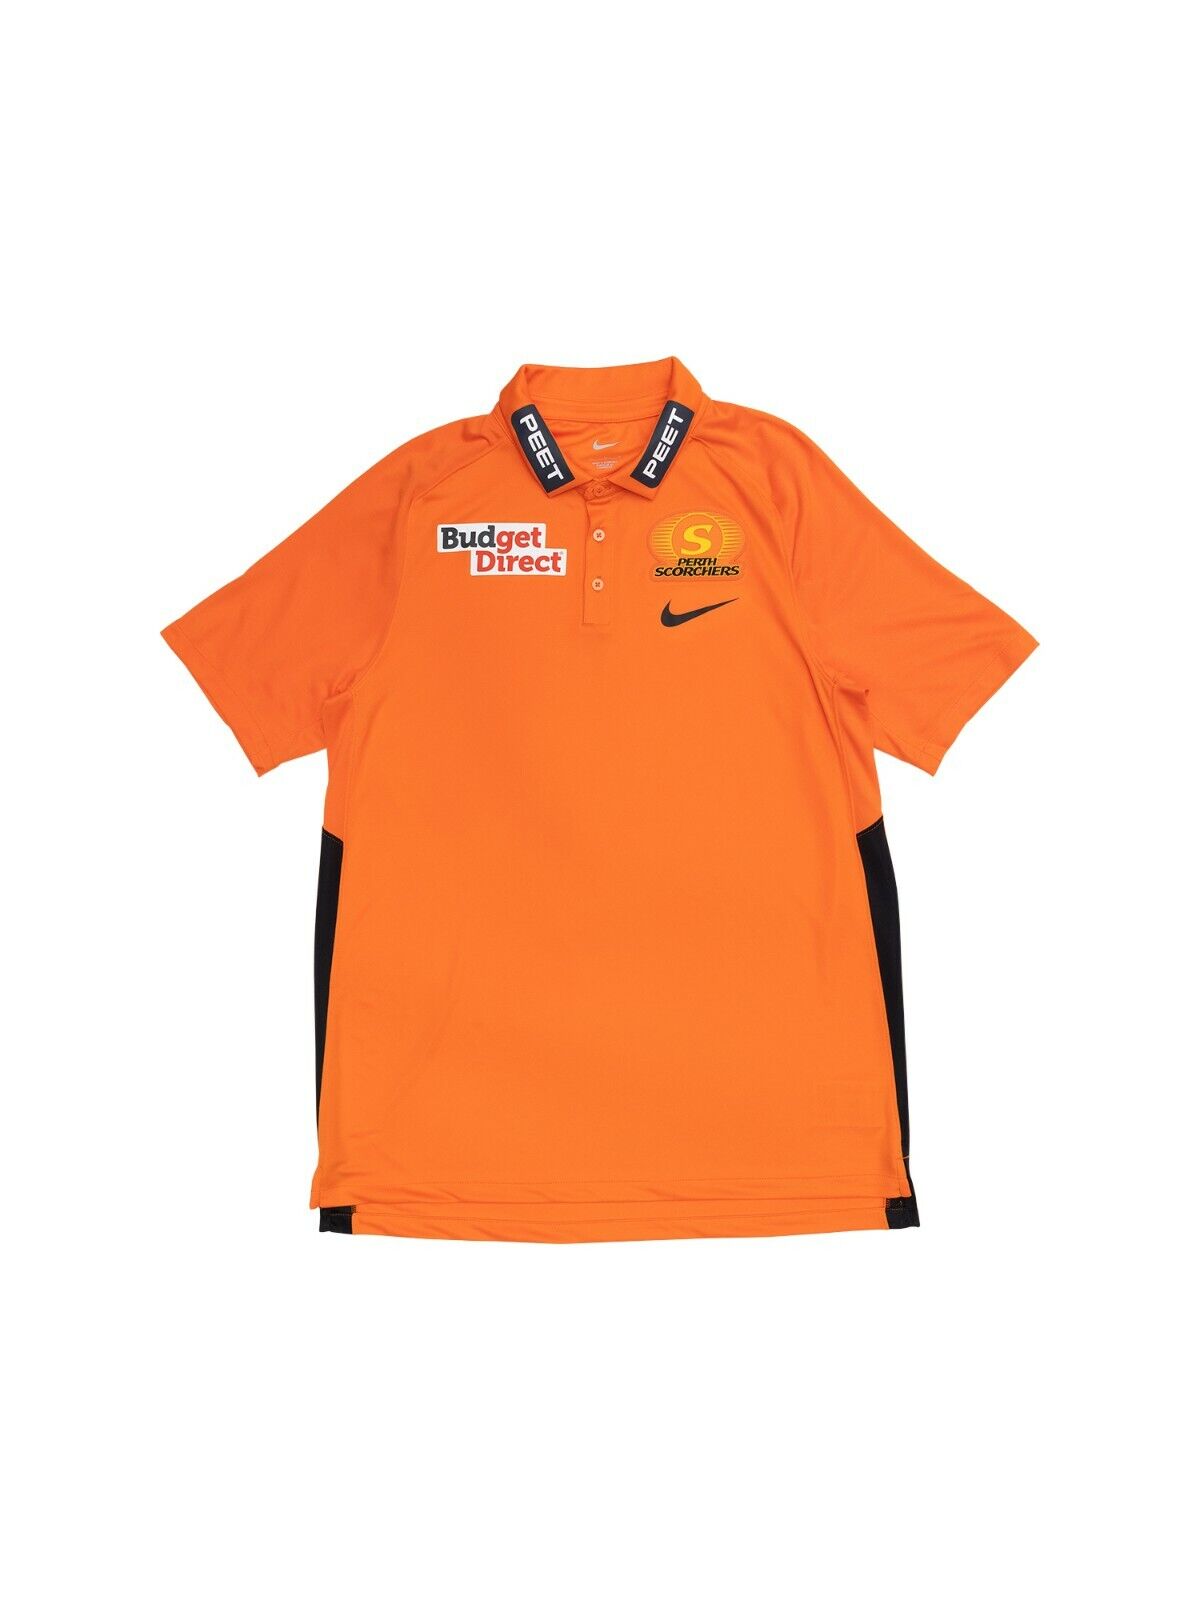 BBL 2021/2022 Cricket Polo Shirt - Perth Scorchers - Big Bash Cr